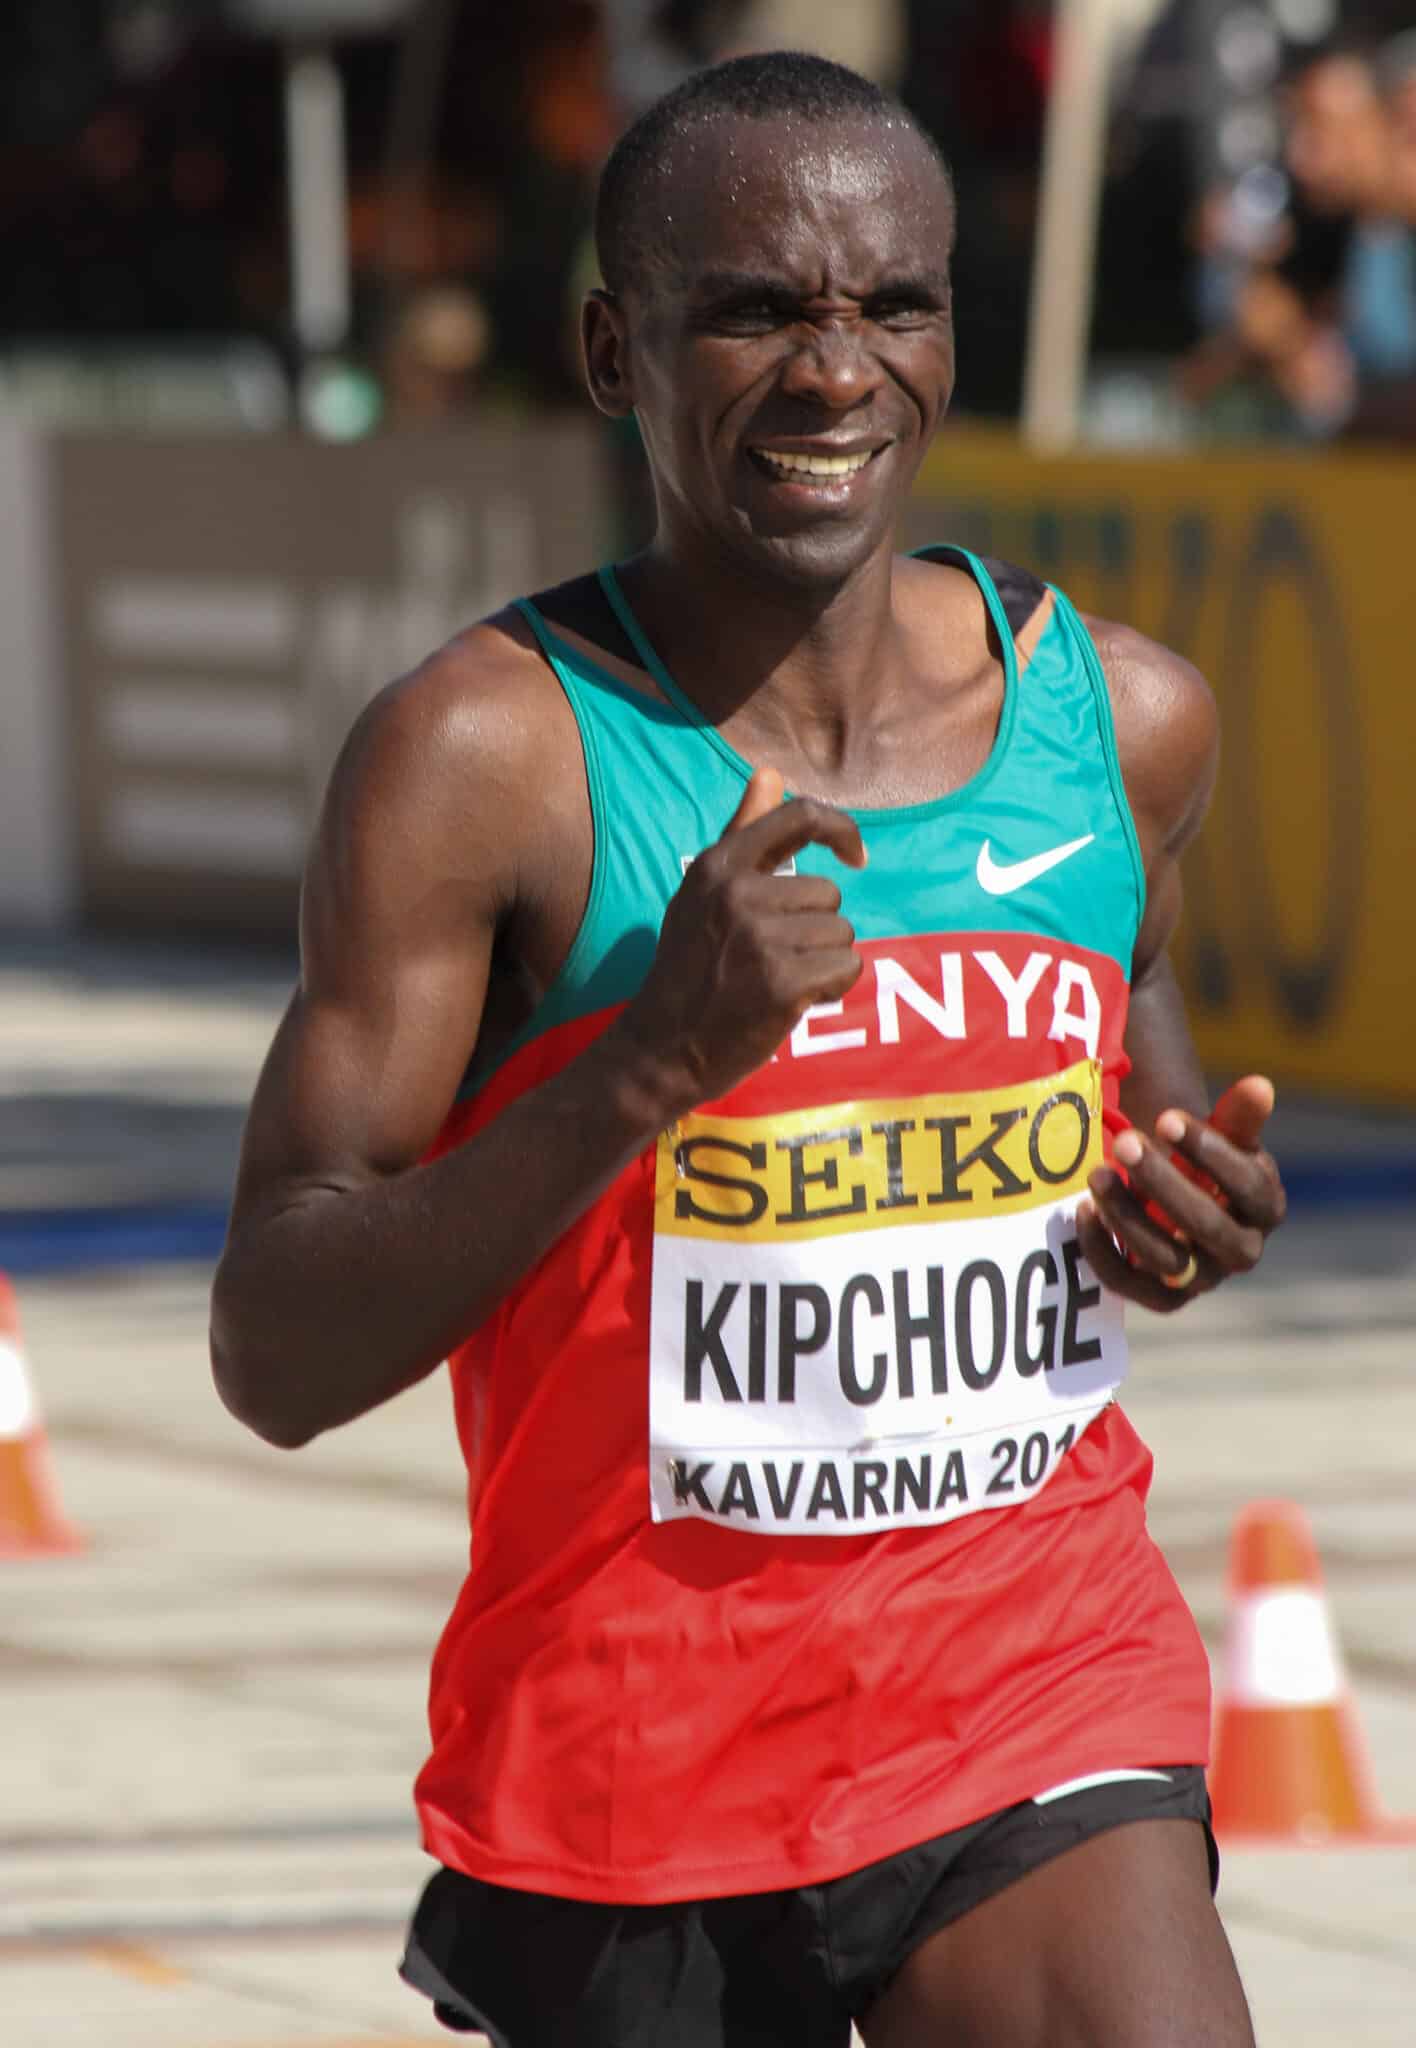 Kipchoge at the 2012 World Half Marathon Championships in Kavarna